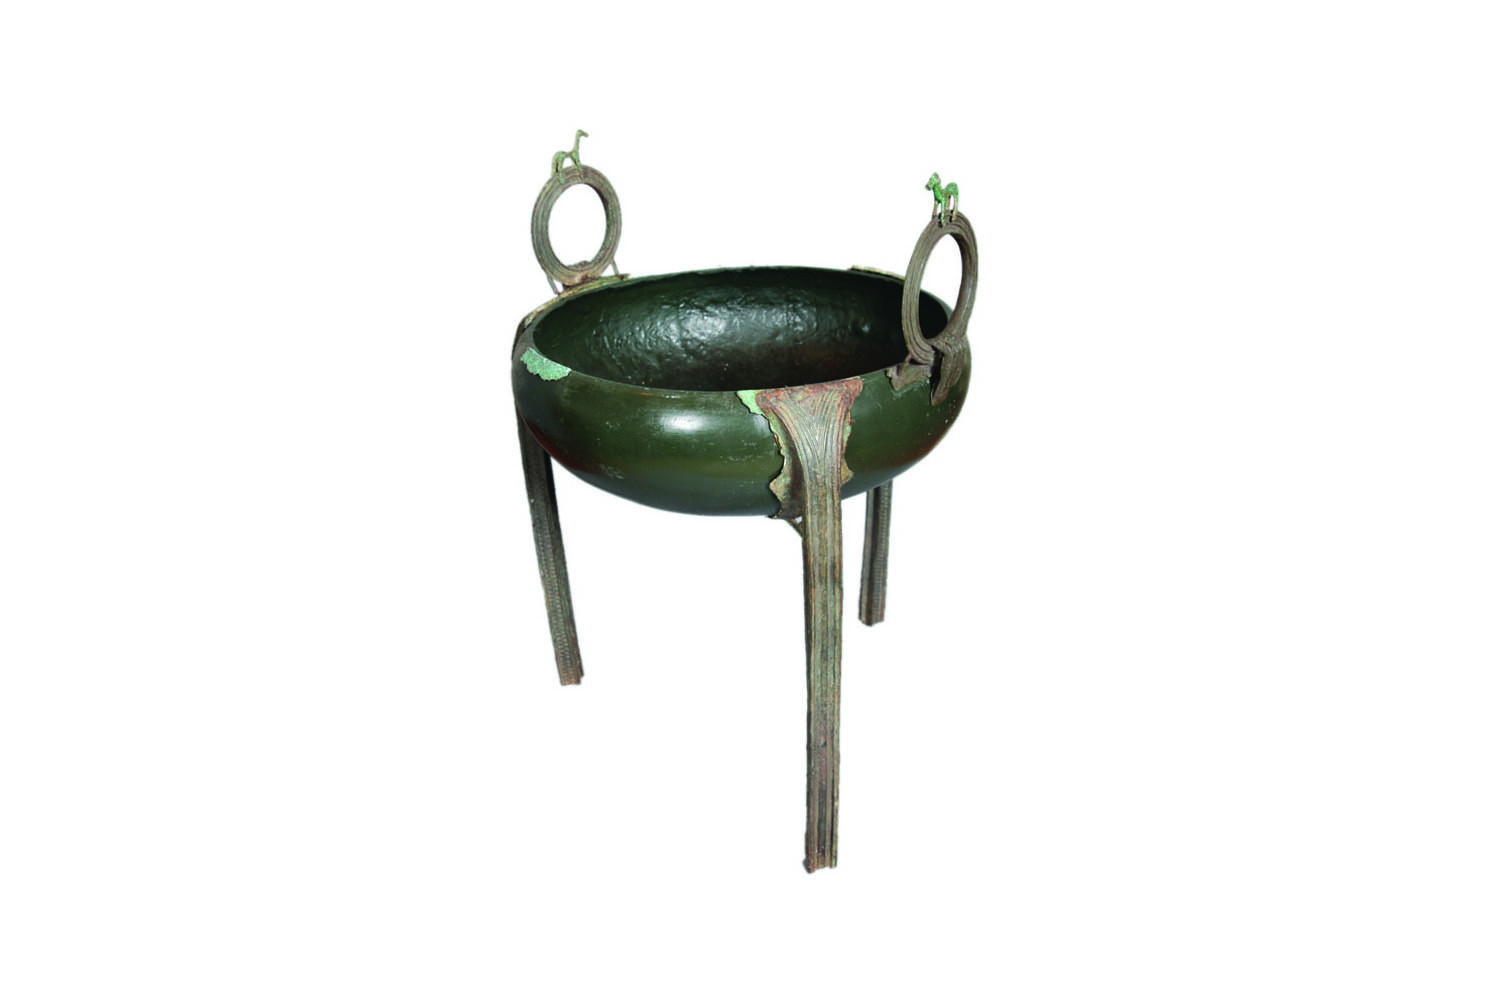 Greek, Ring-Handled Tripod Cauldron , Early eighth century B.C., Bronze,
The Sol Rabin Collection